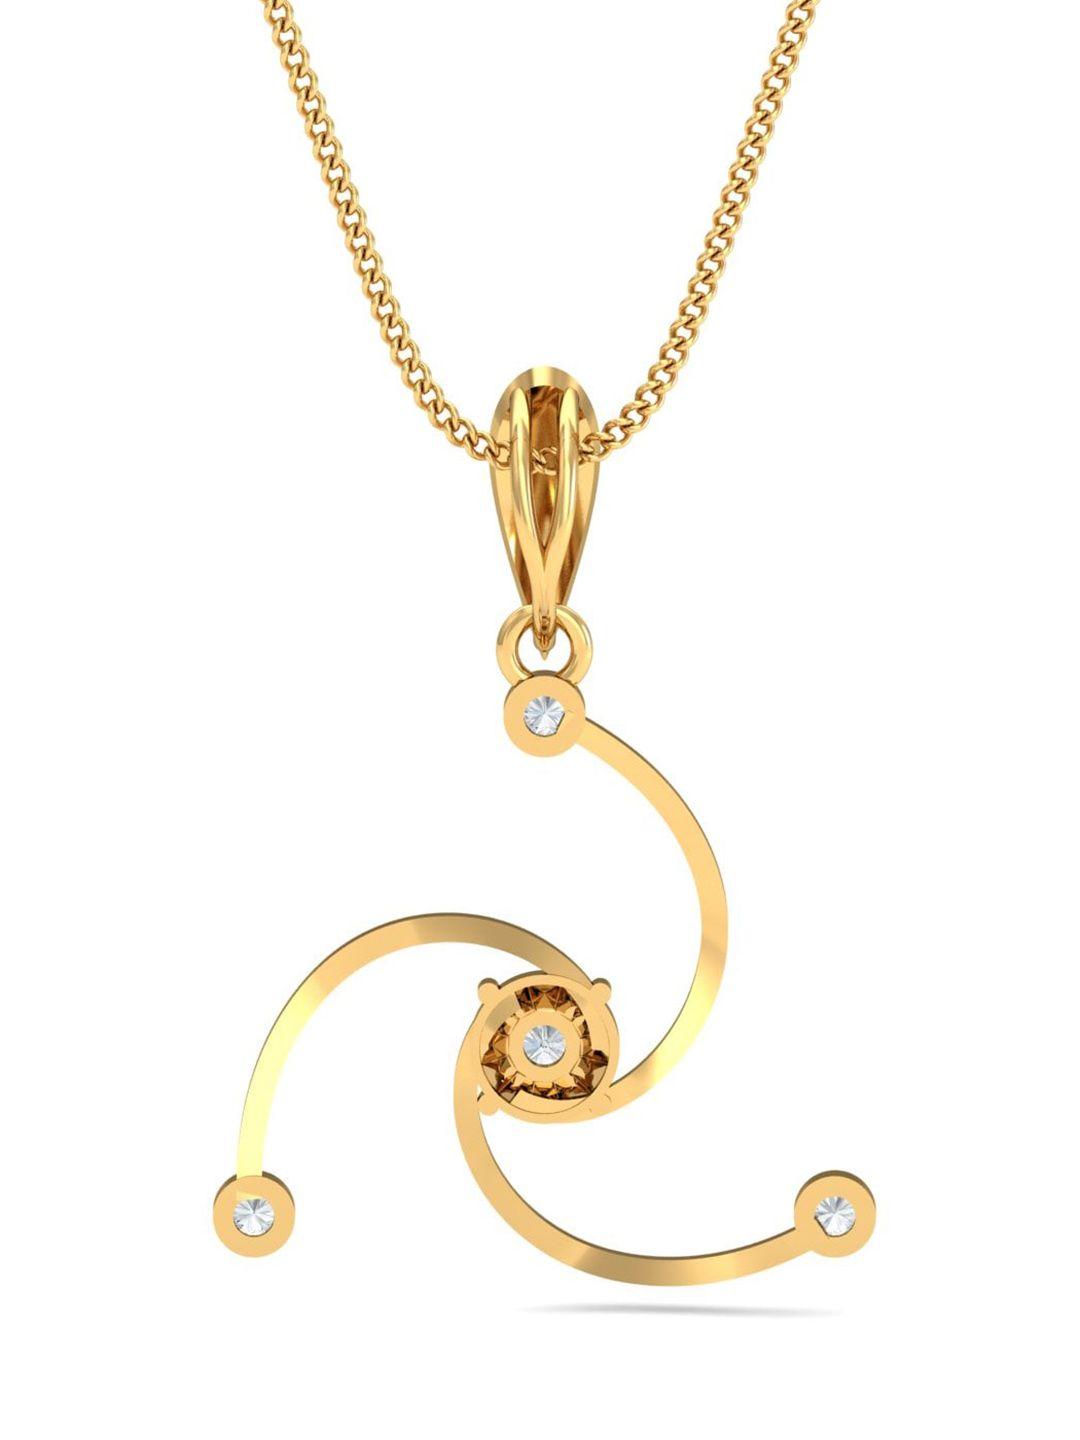 kuberbox inspiring trio 18kt gold pendant with diamonds- 1.09726gm